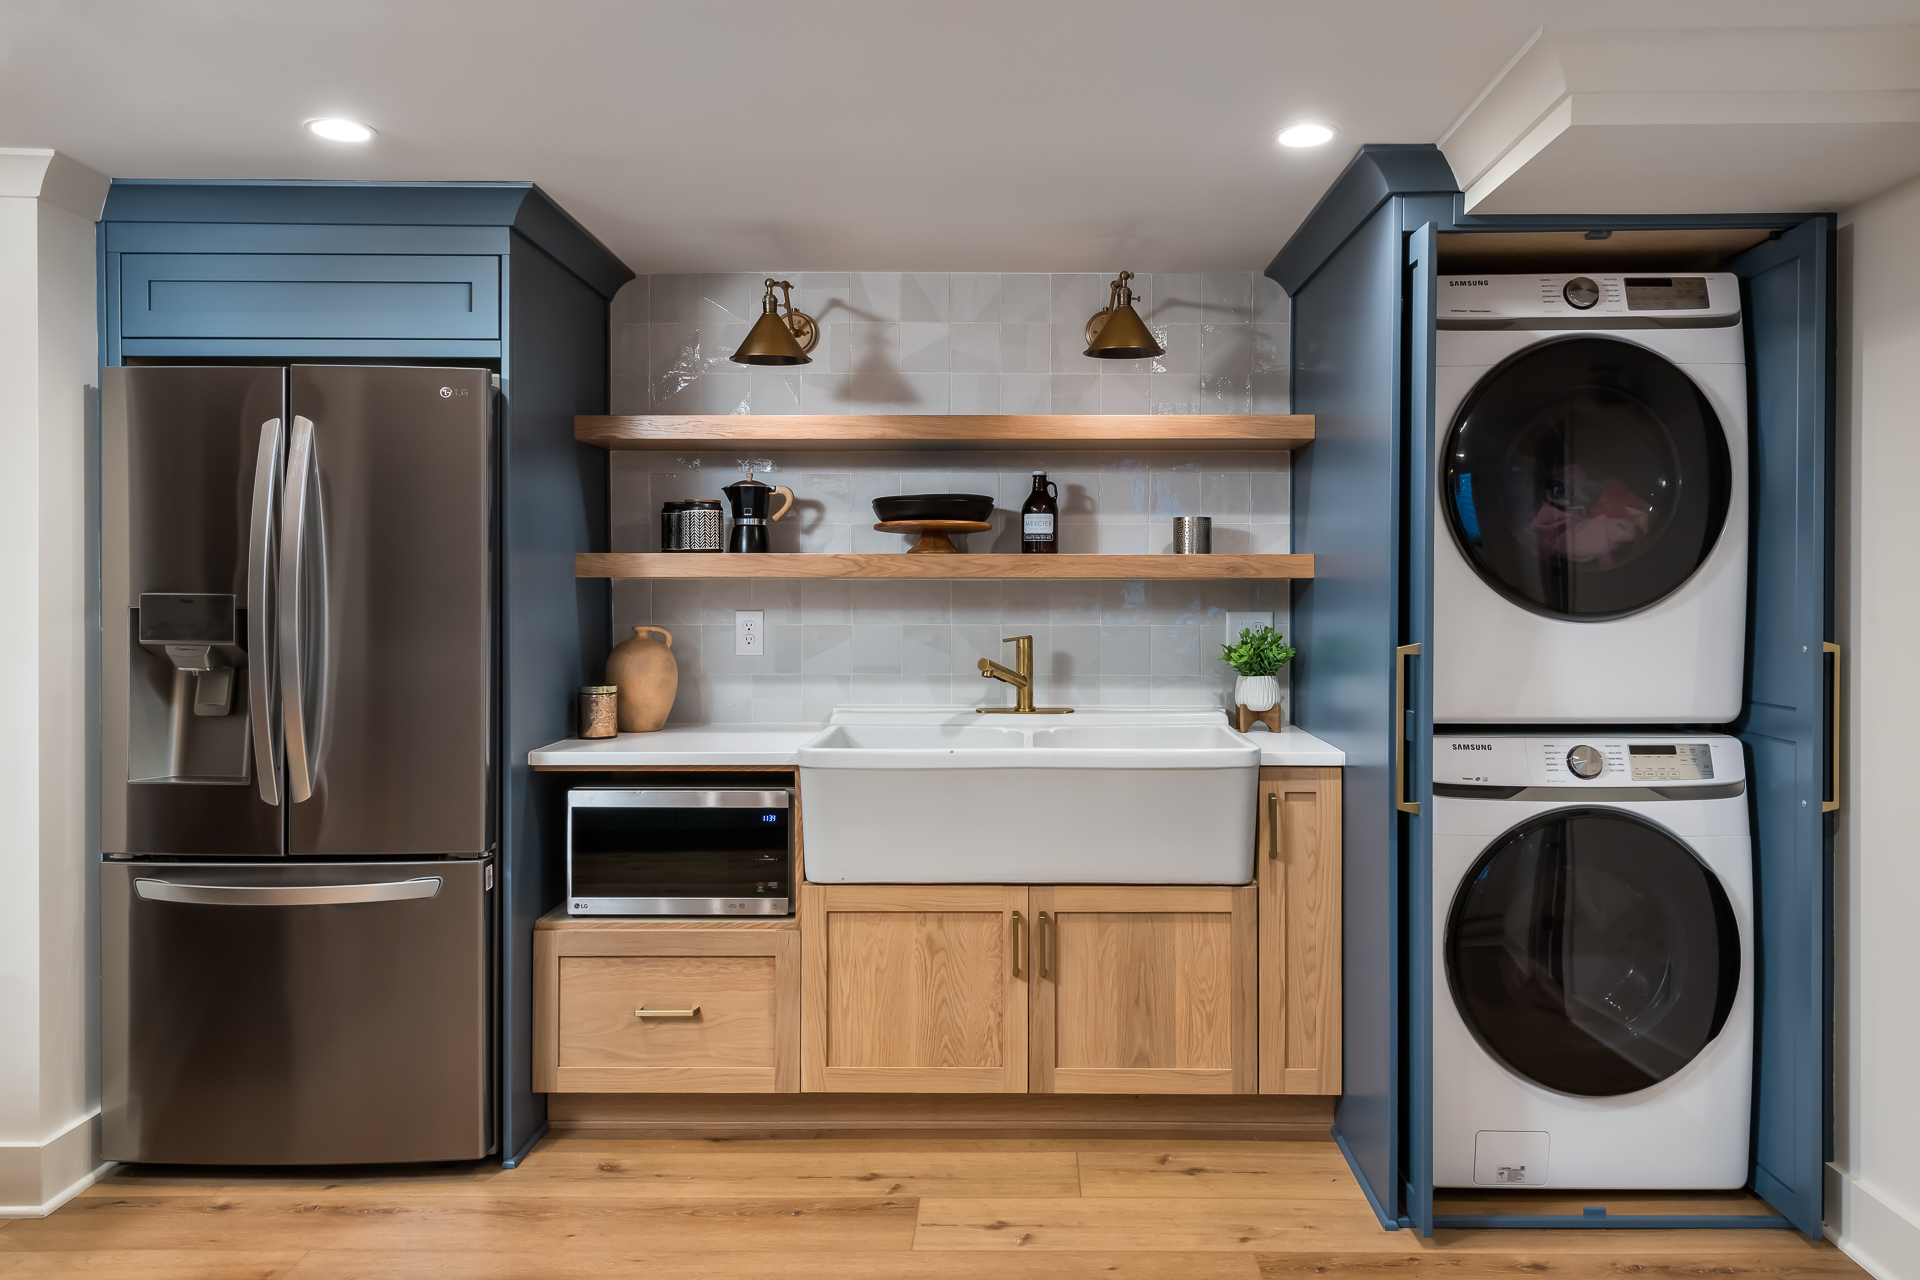 Basement Doubles As Studio Apartment Mini Kitchen